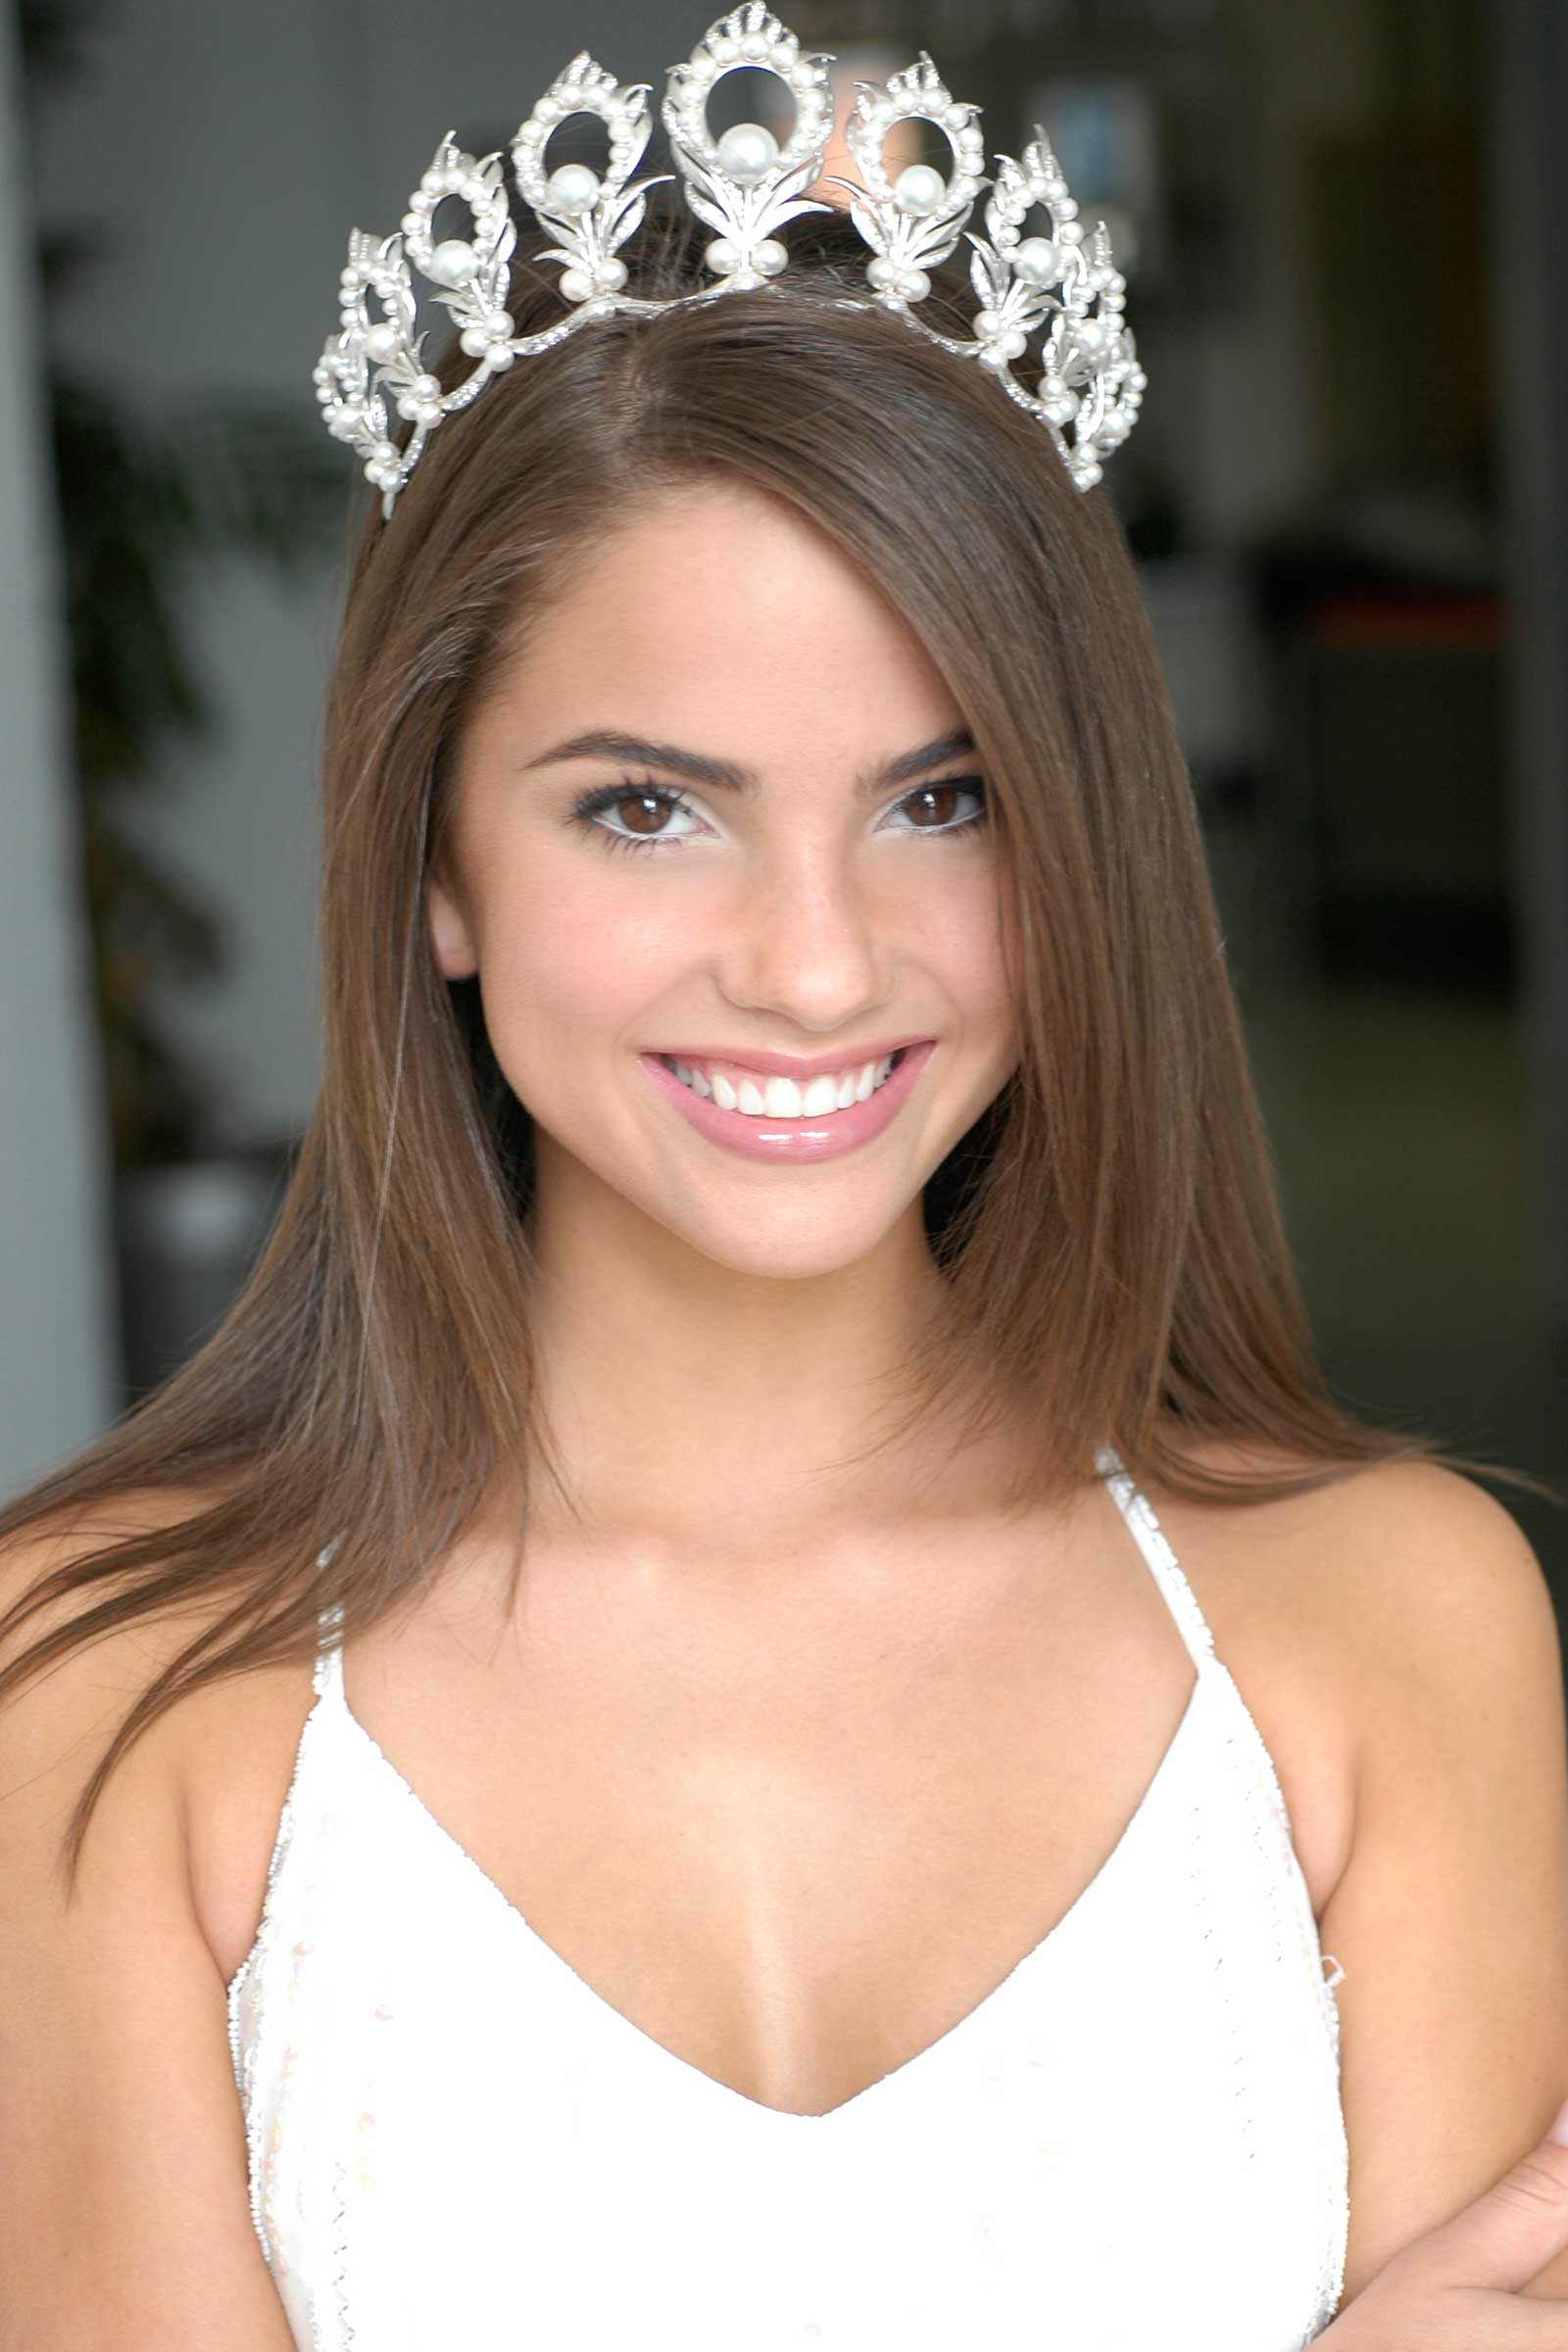 Miss Teen Louisiana eyes opportunities for impact in 2020